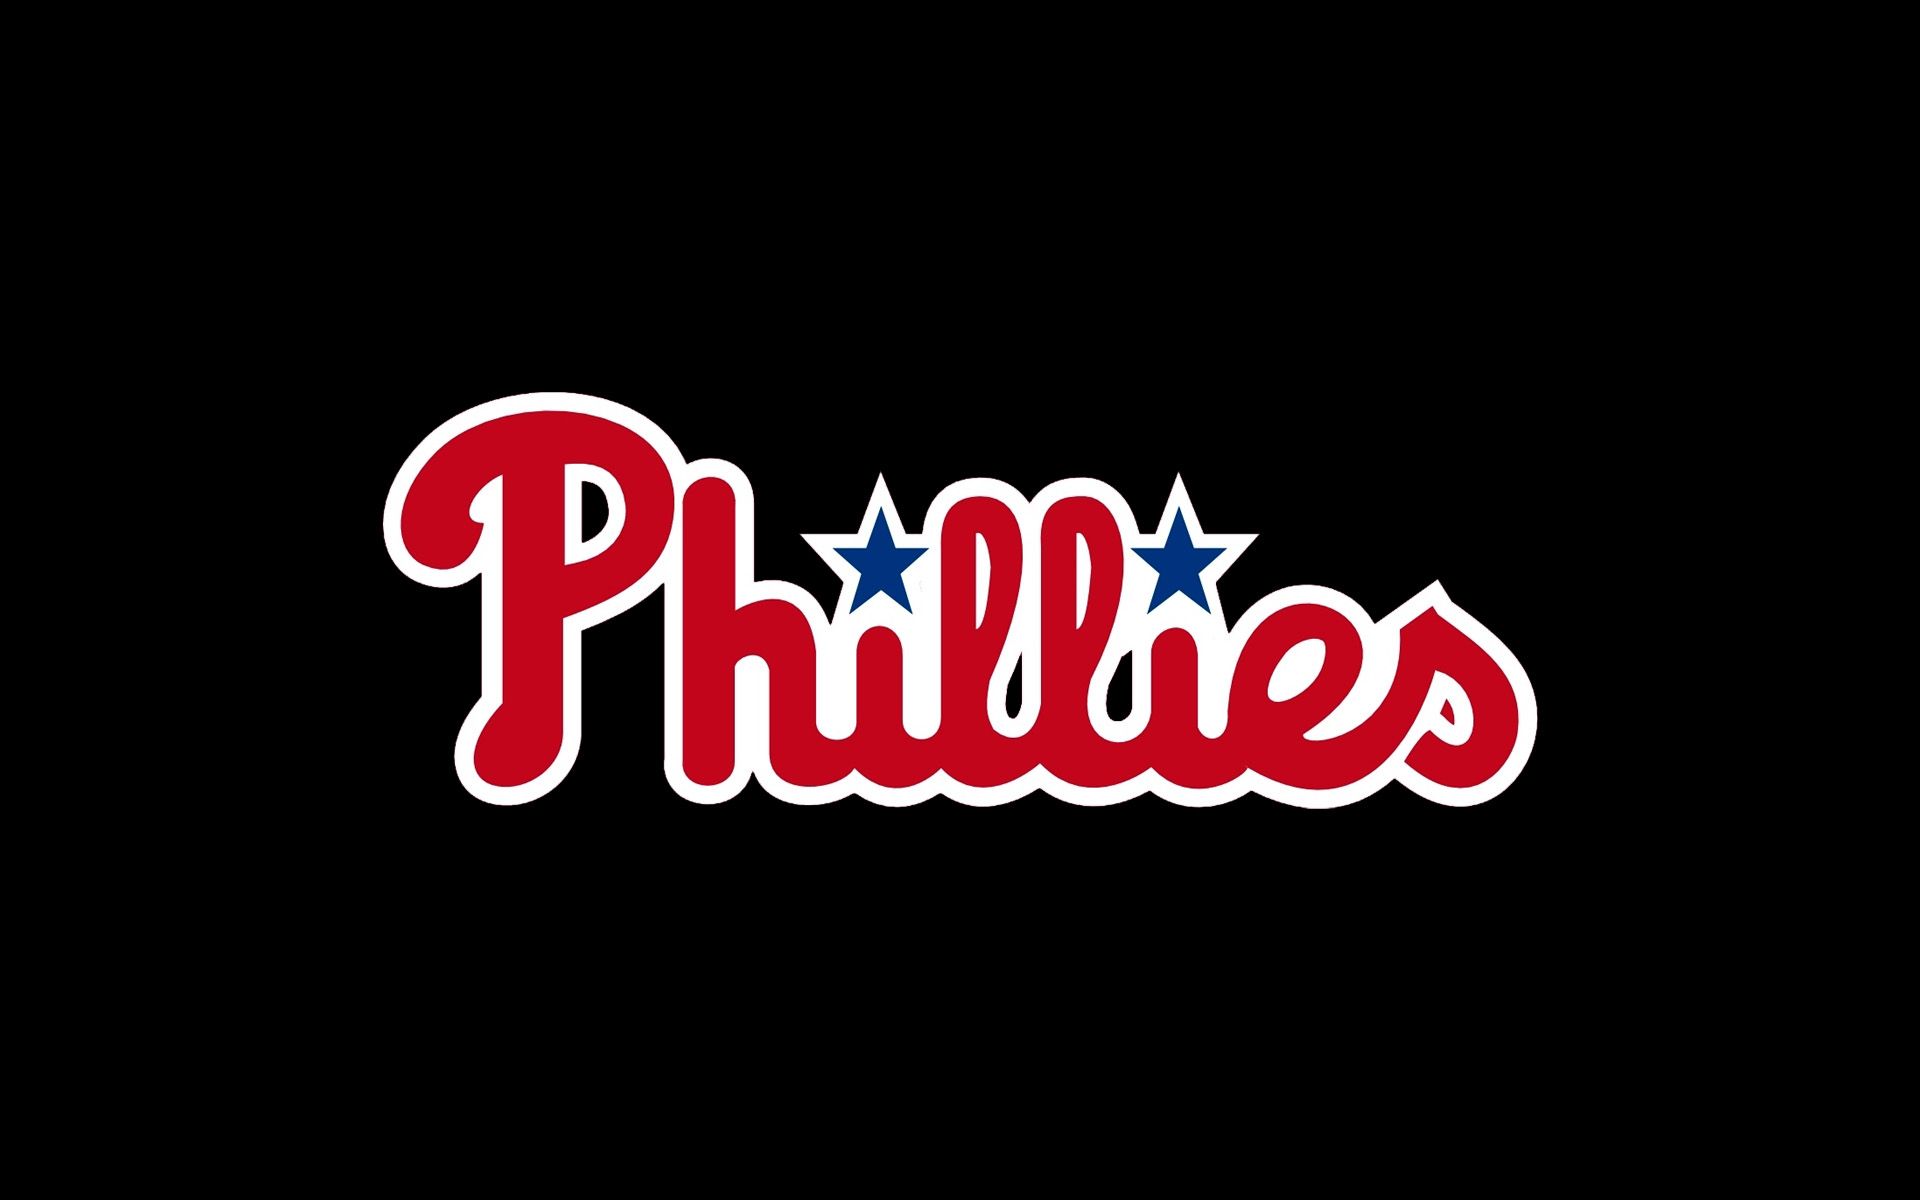 Philadelphia Phillies Logo Wallpapers